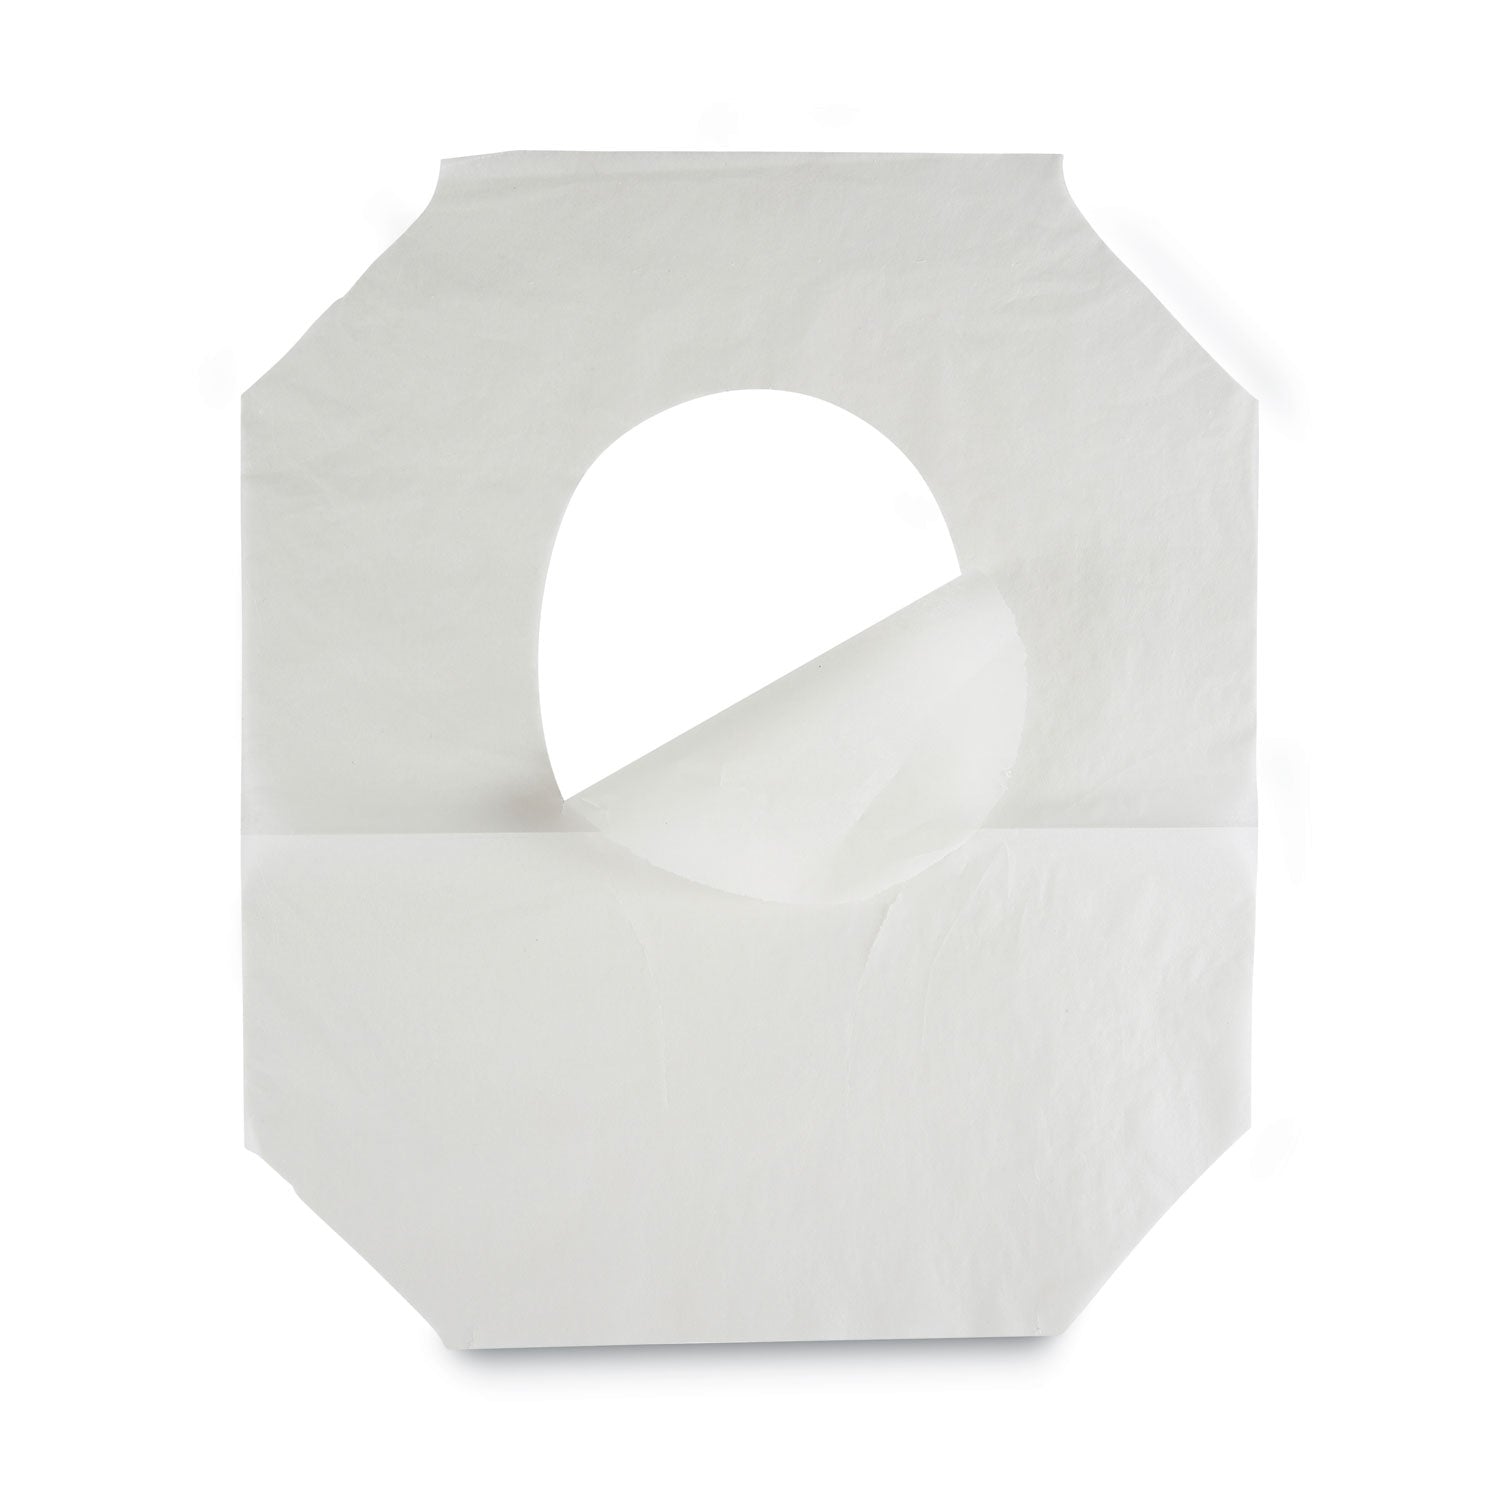 premium-half-fold-toilet-seat-covers-1417-x-1673-white-250-covers-sleeve-20-sleeves-carton_bwkk5000b - 4